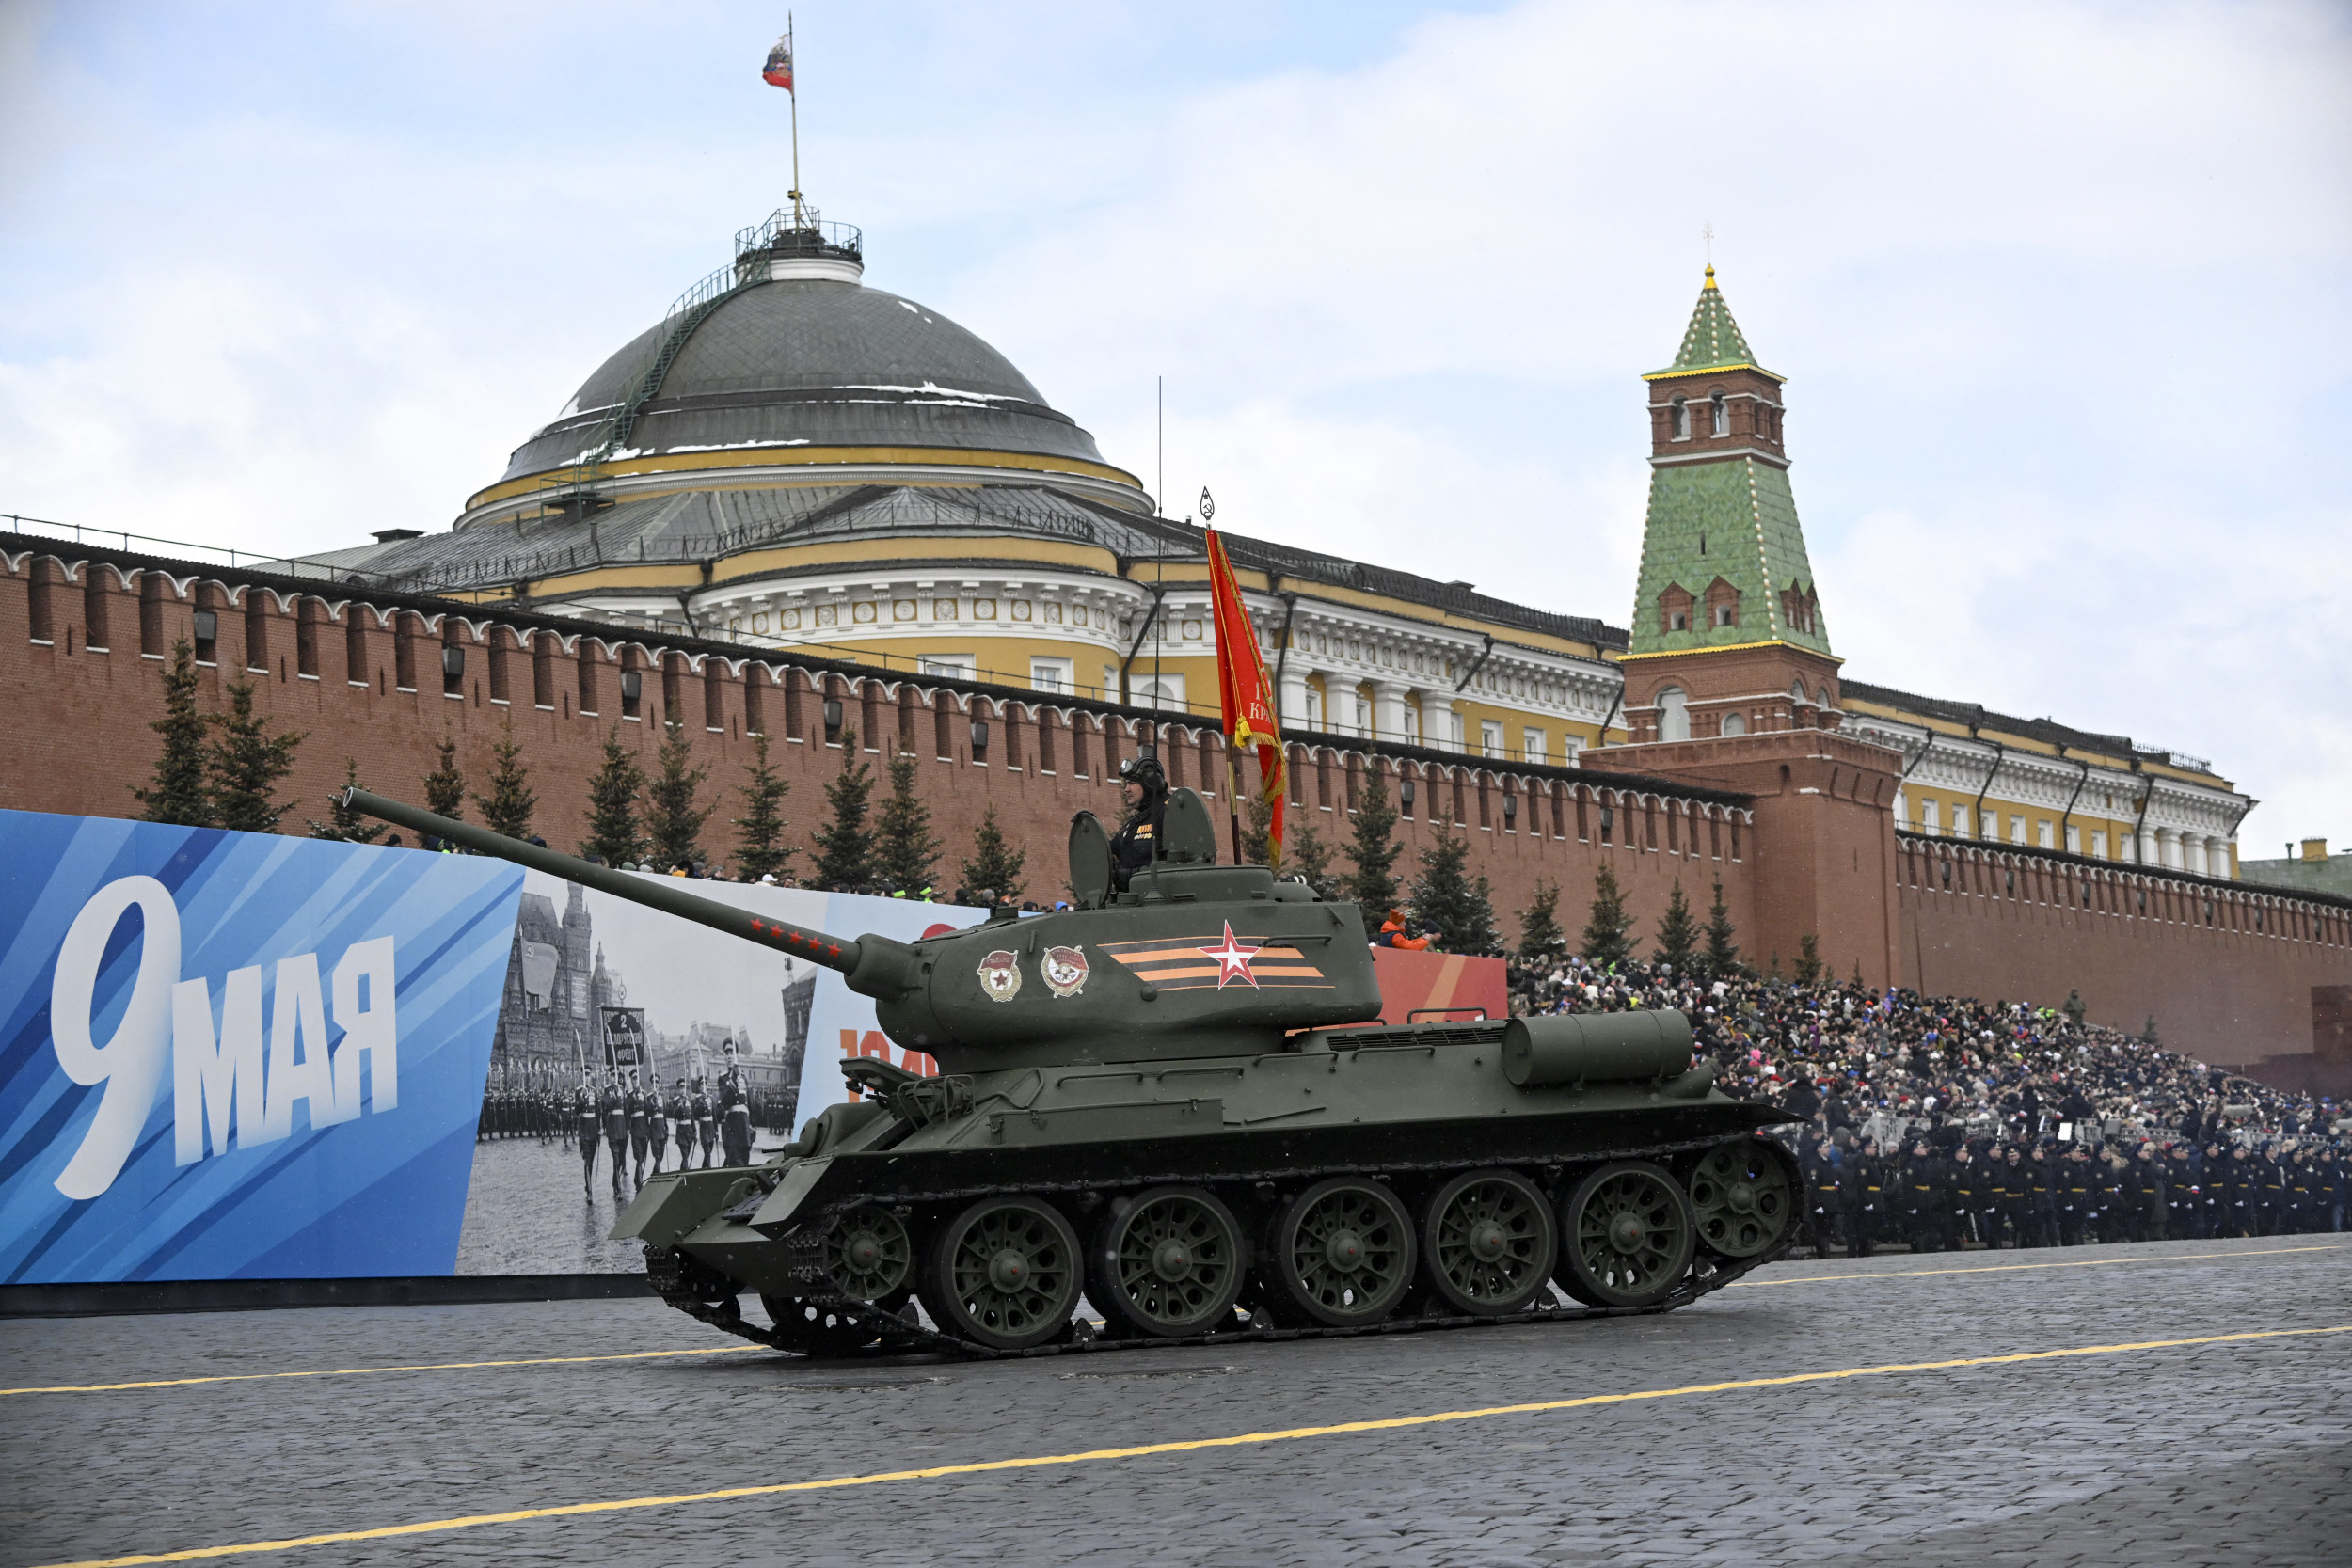 putin mocked over single tank at victory parade